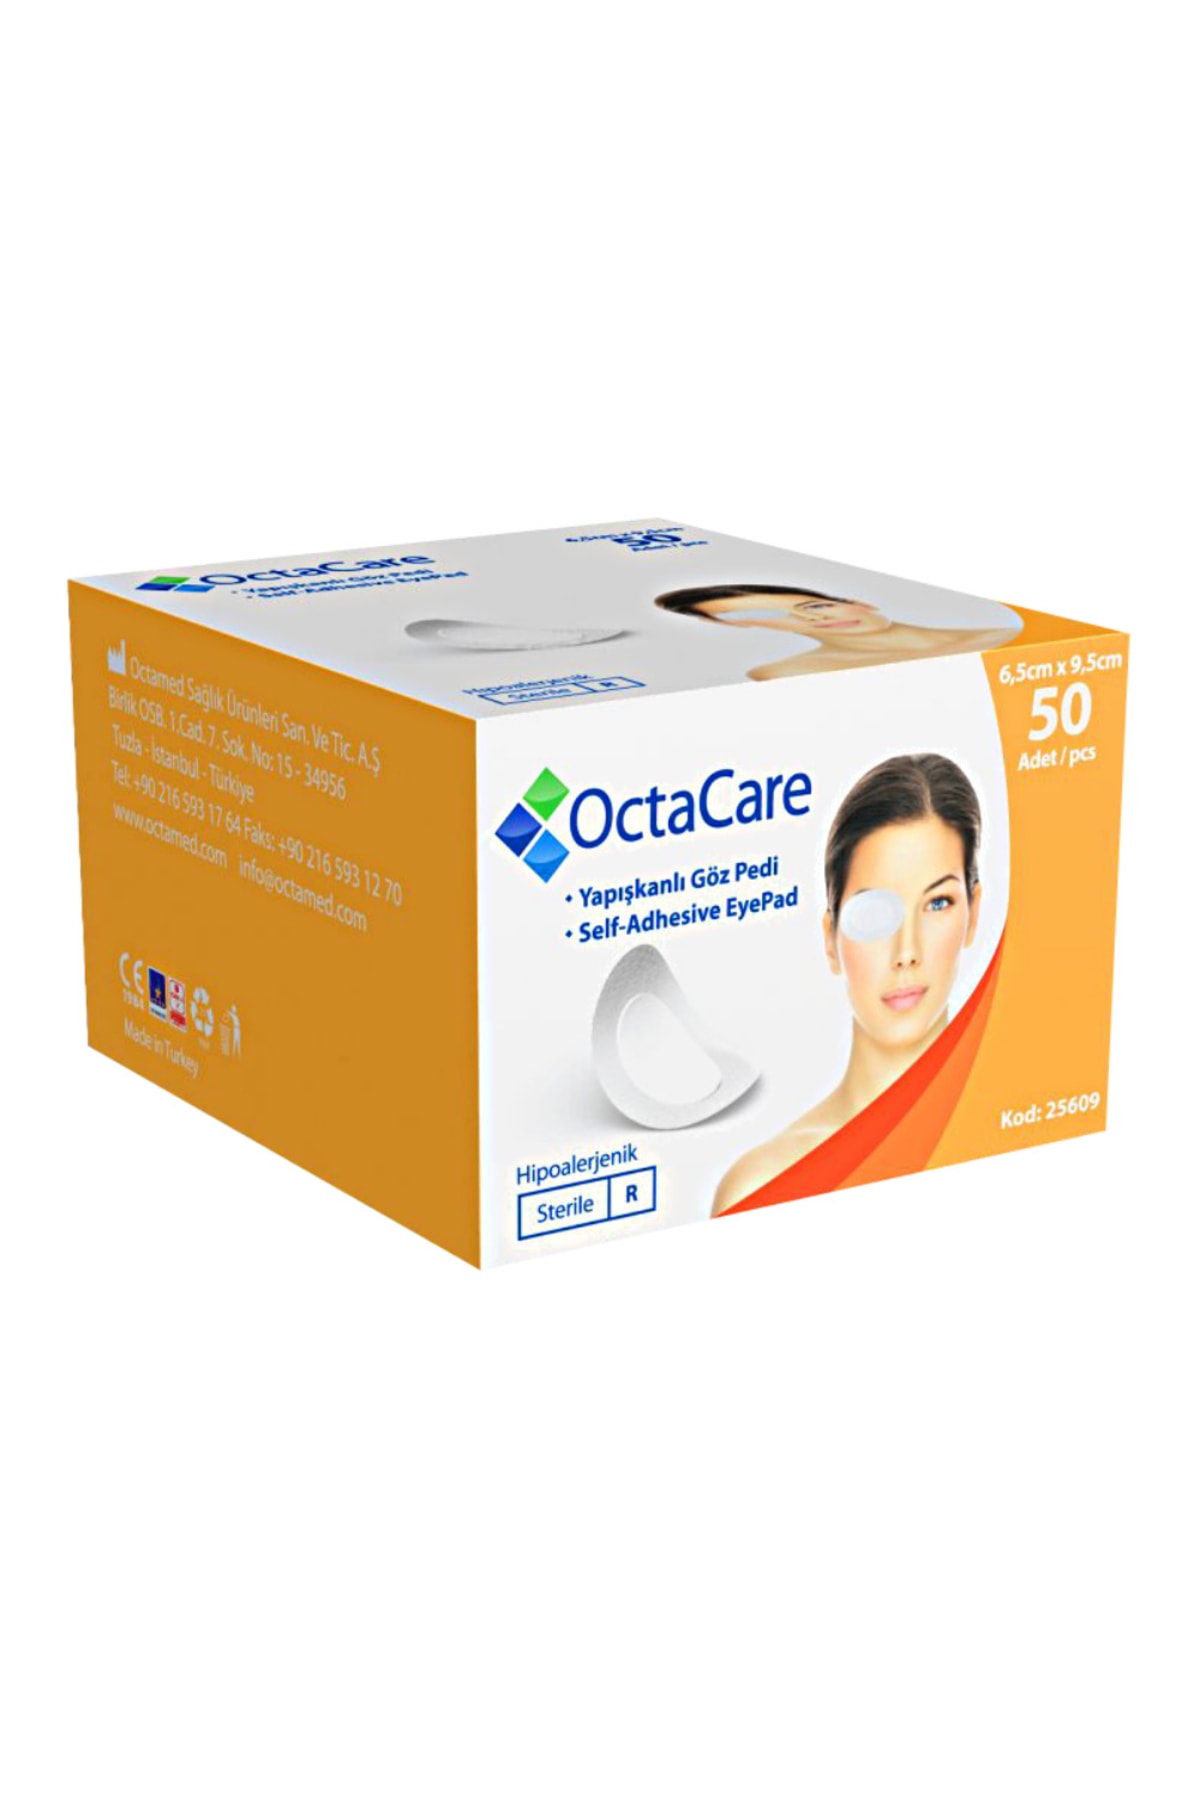 Octacare Steril Göz Pedi 6.5cm X 9.5 Cm 50'li - 1 Kutu Tekli Paketlerde